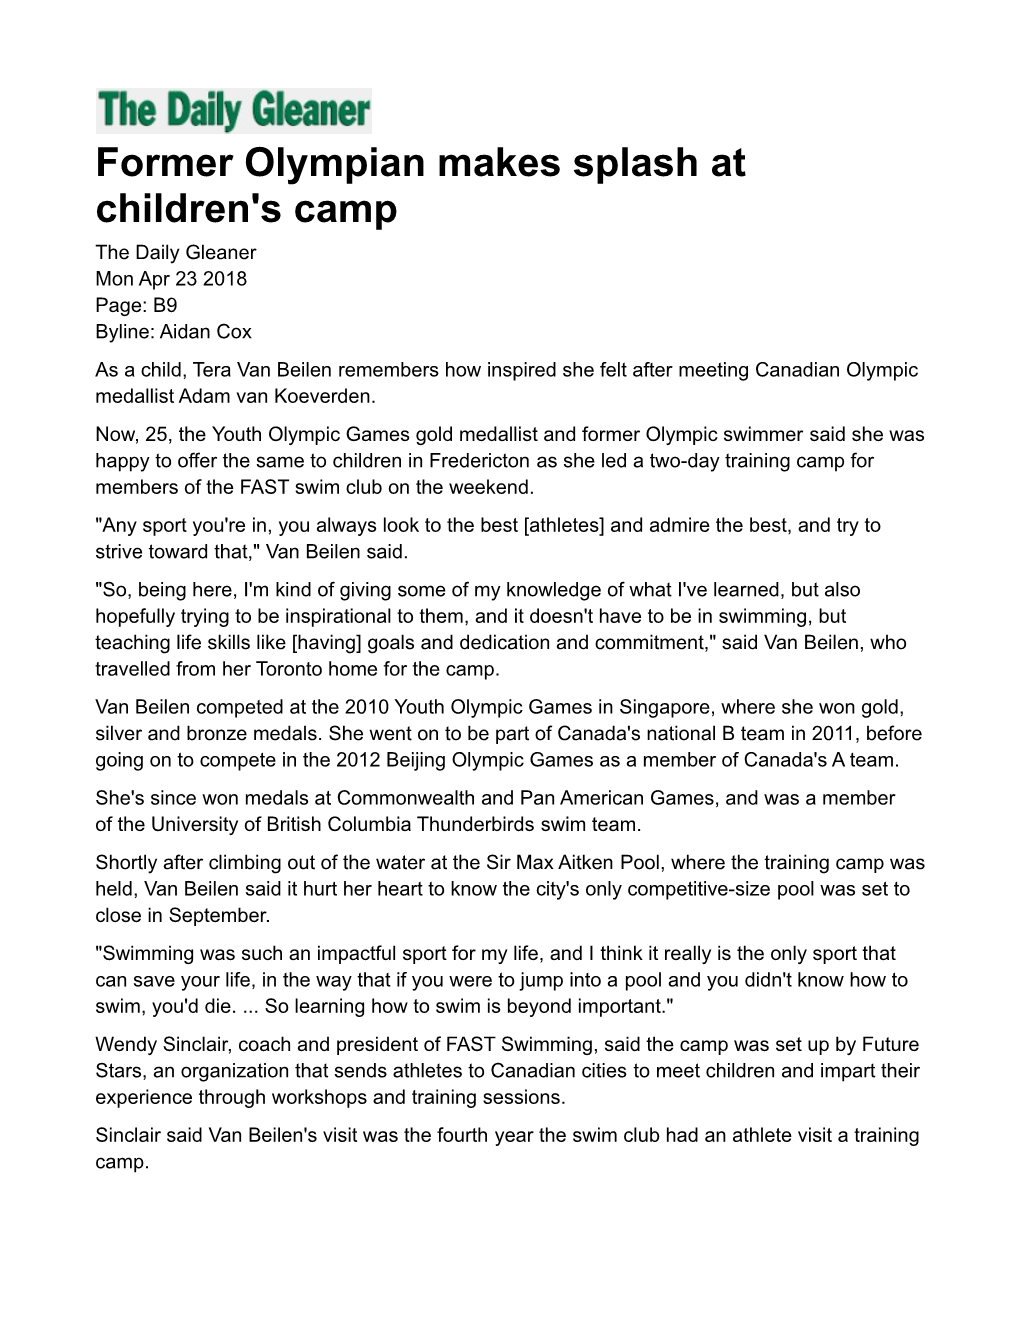 Former Olympian Makes Splash at Children's Camp